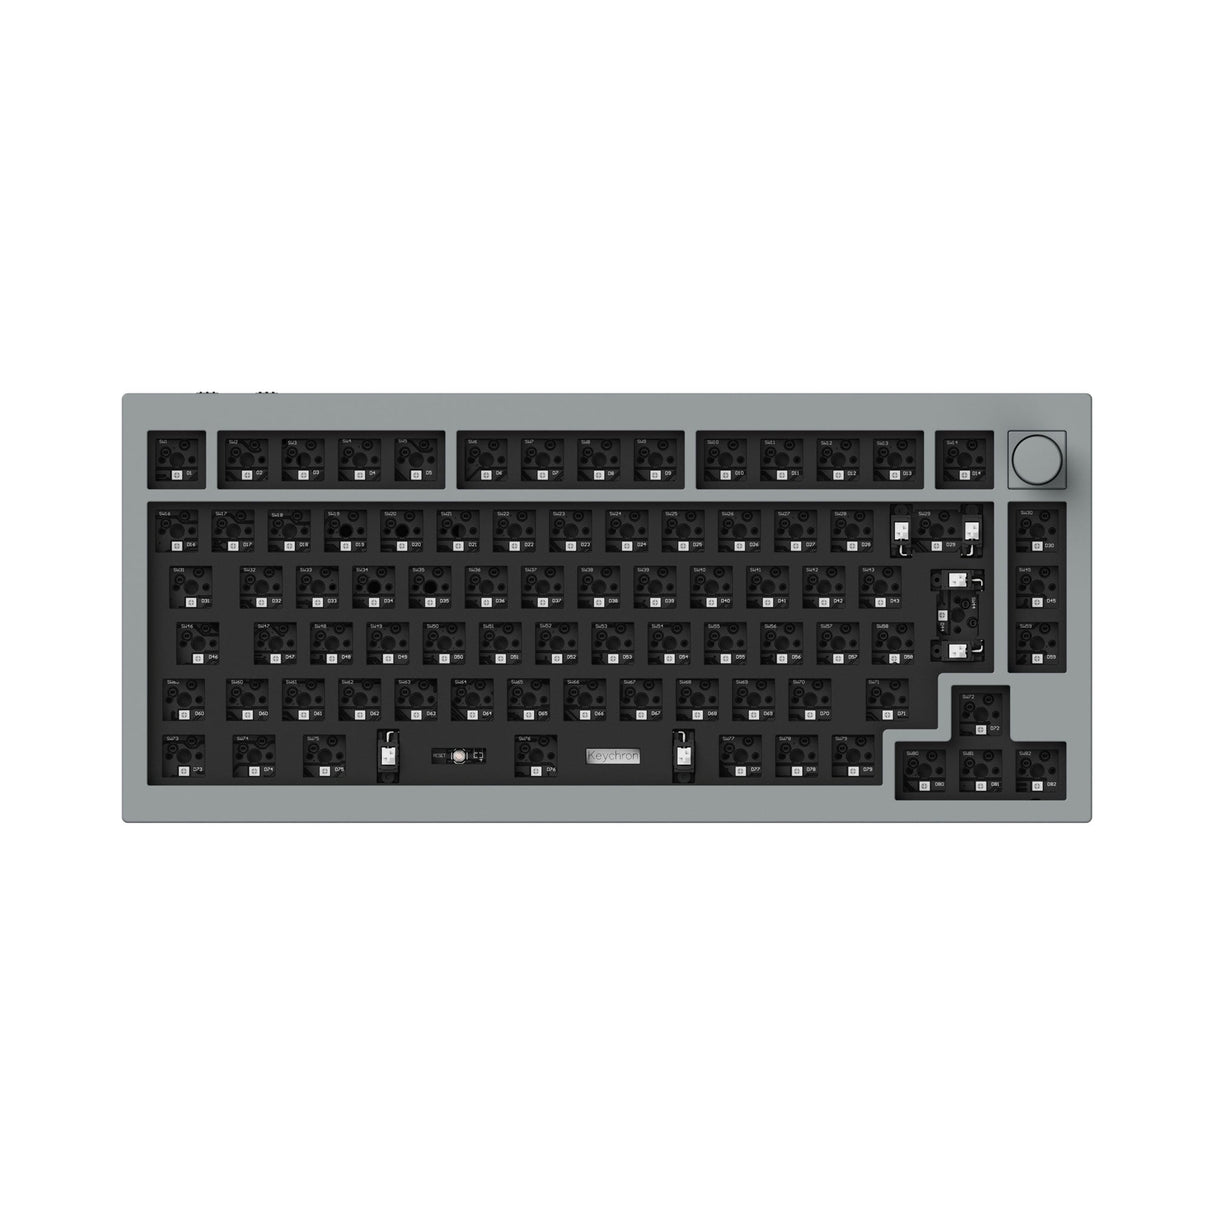 Keychron Q1 Pro QMK/VIA wireless custom mechanical keyboard knob 75% layout full aluminum grey frame for Mac Windows Linux barebone ISO